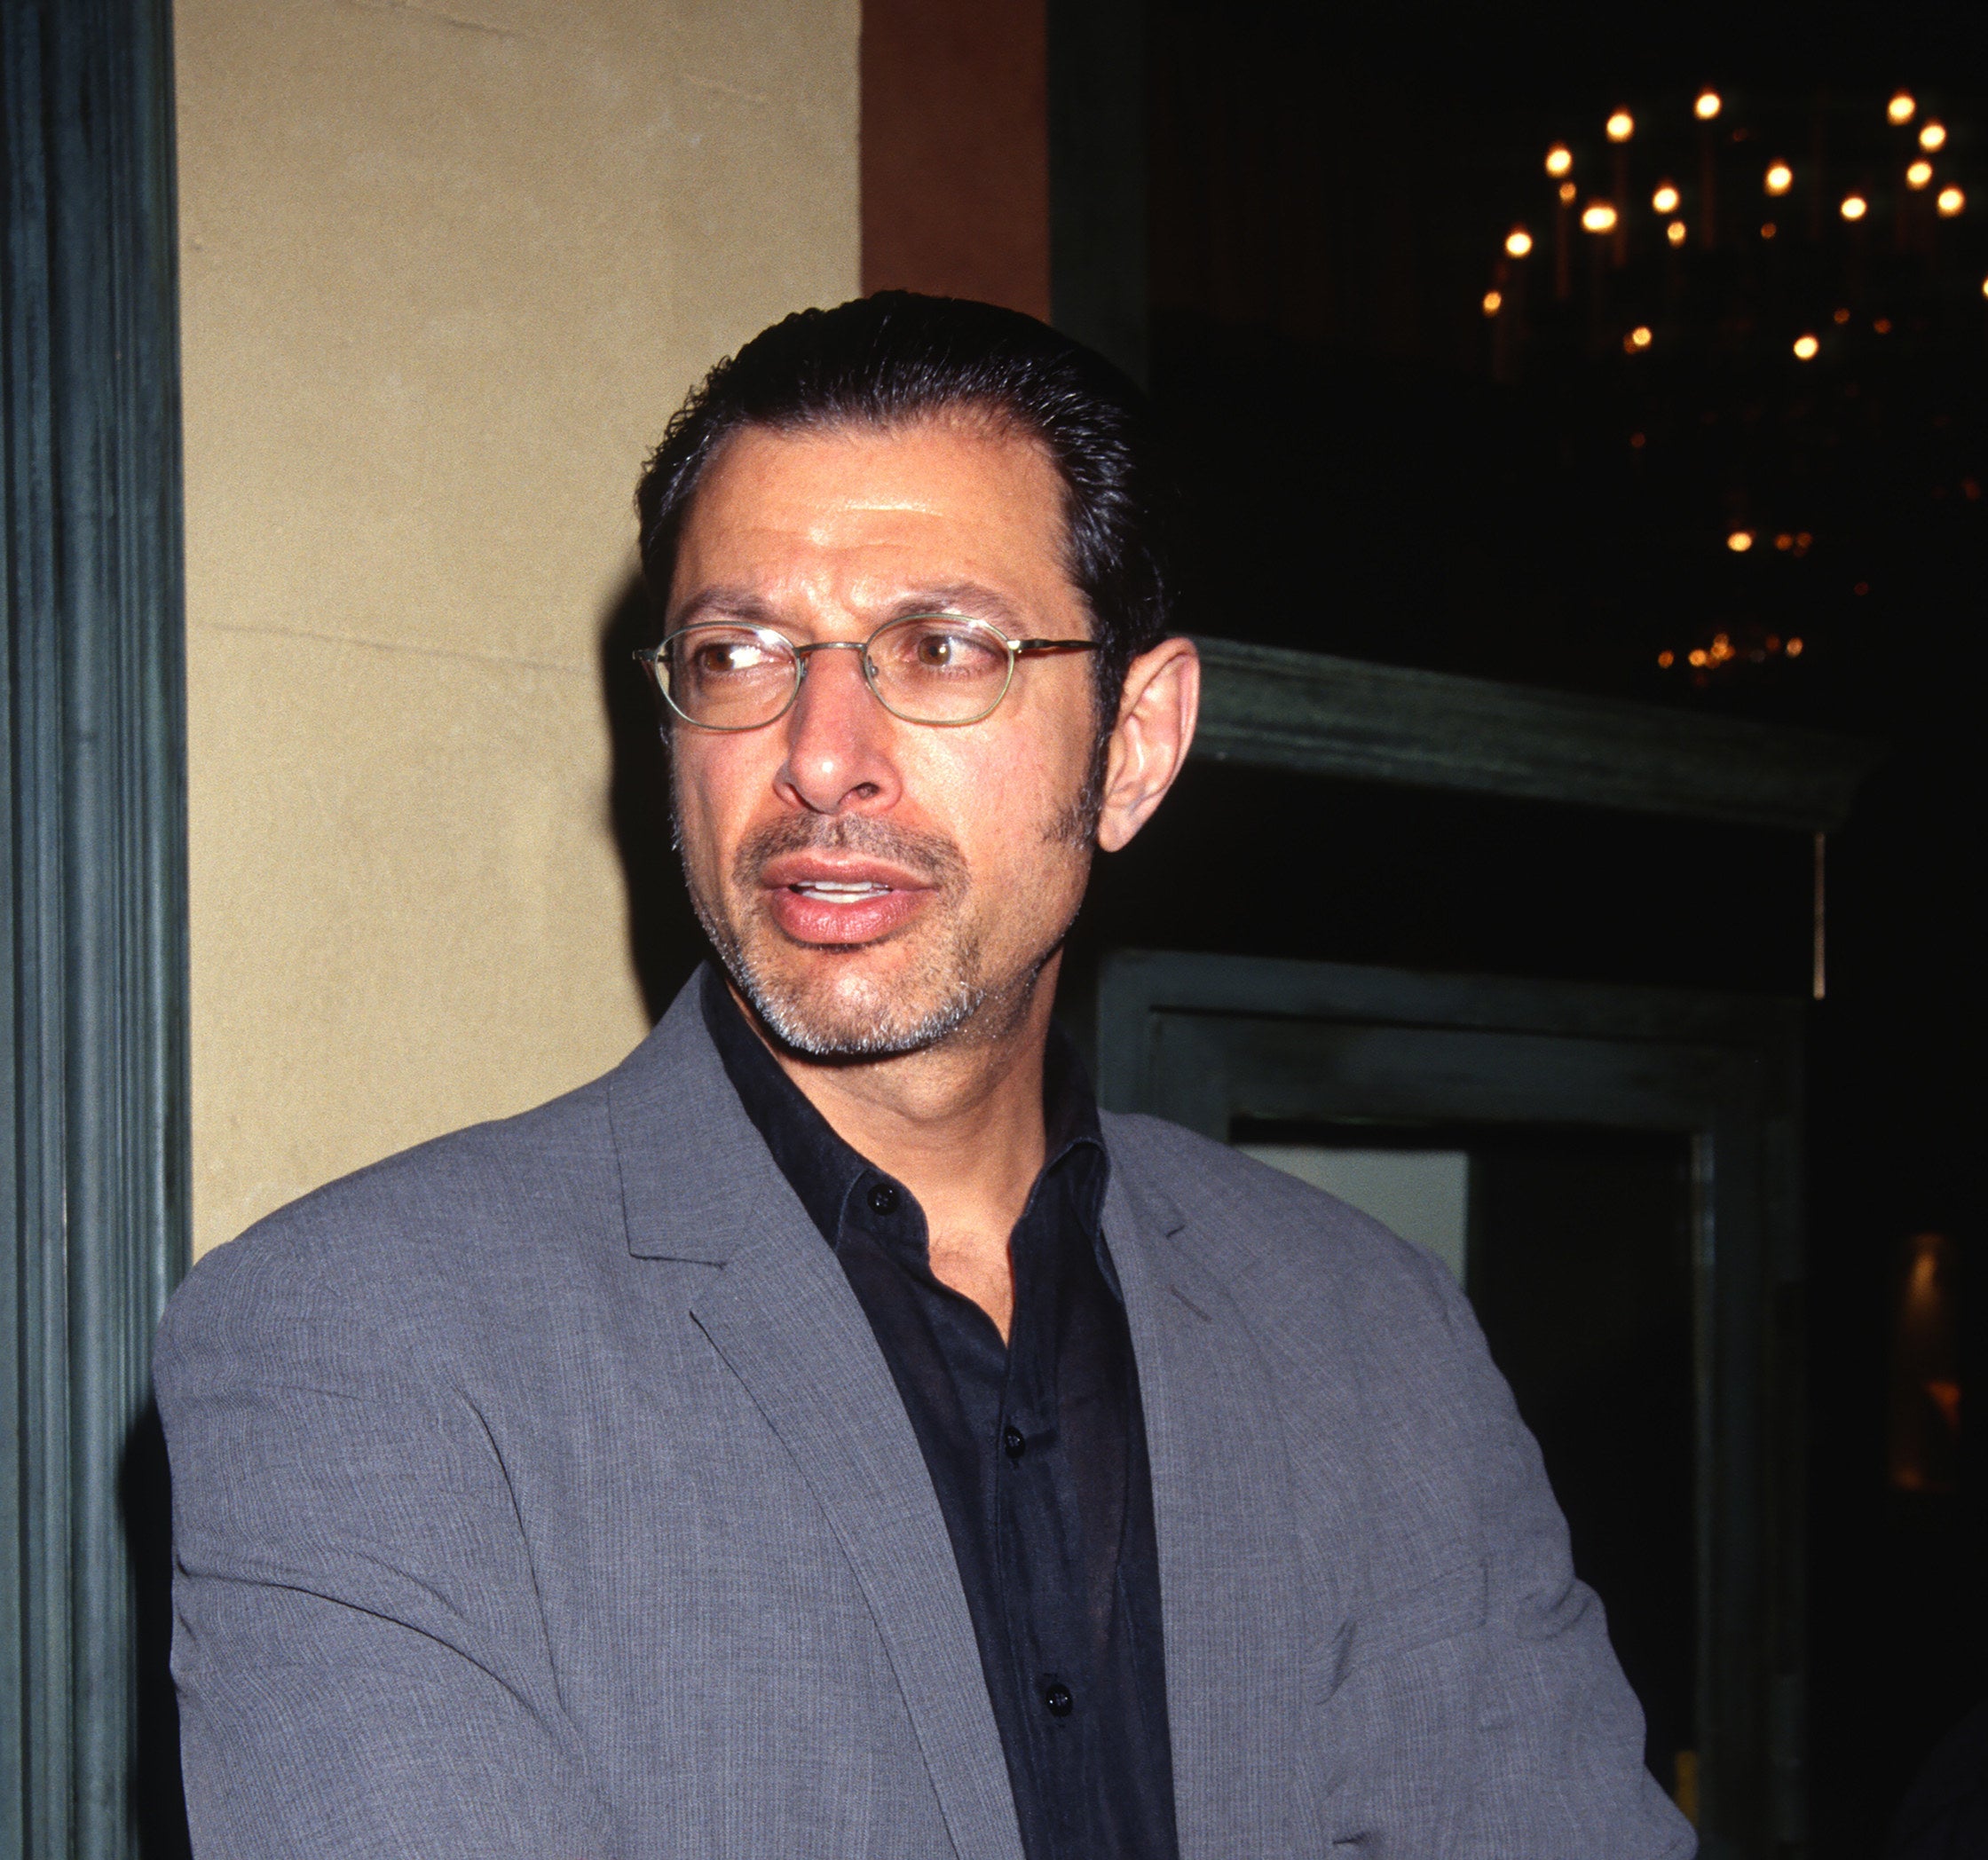 Jeff Goldblum wearing a grey suit and black shirt